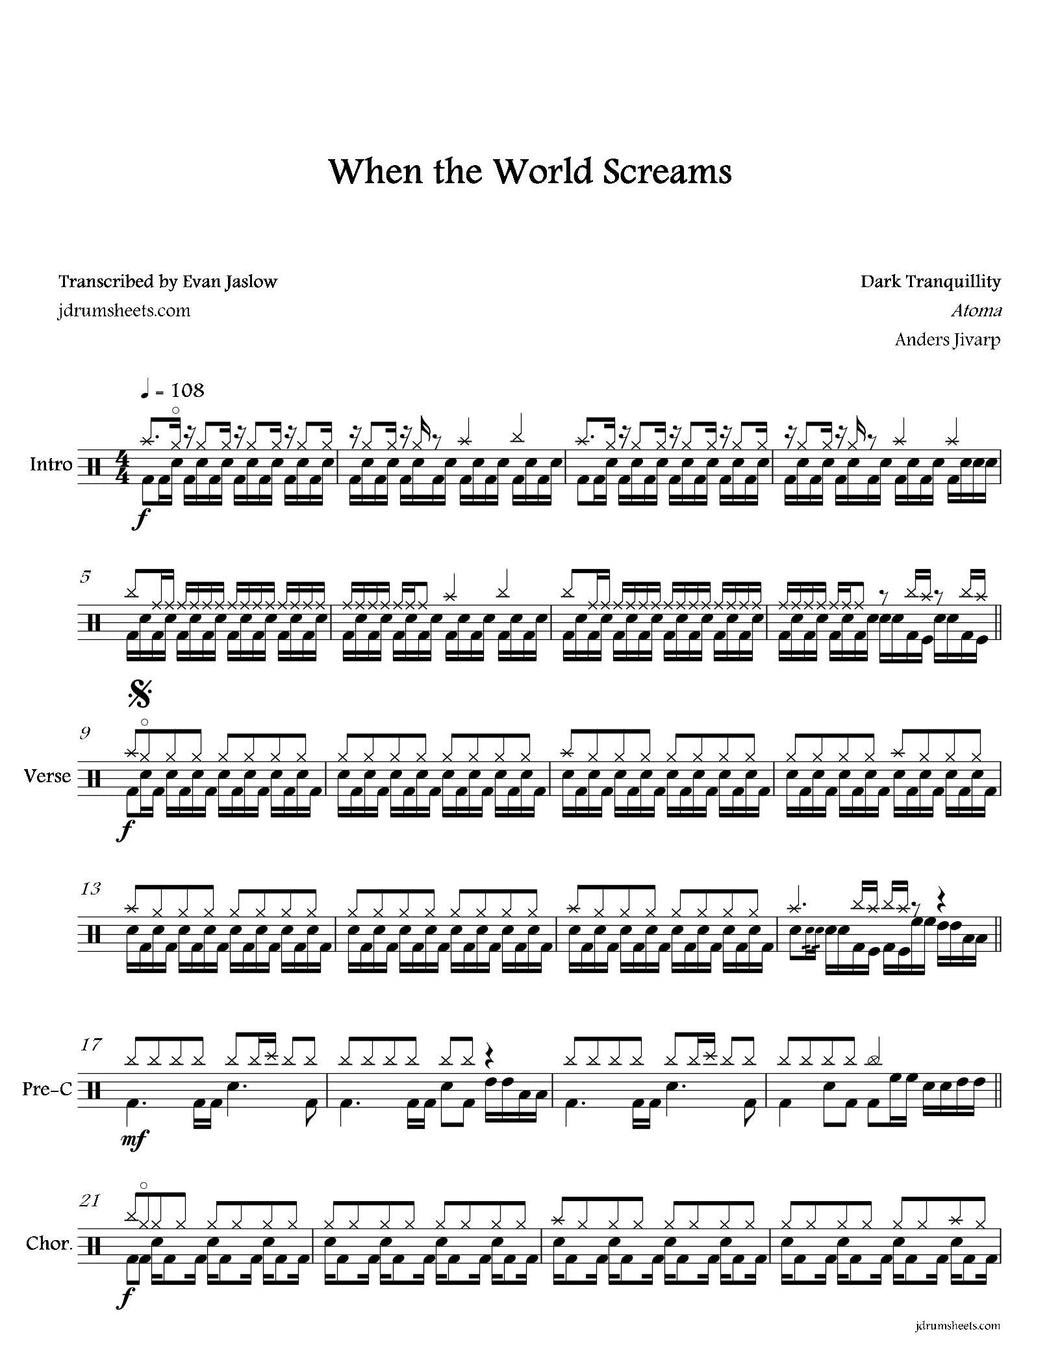 When the World Screams - Dark Tranquillity - Full Drum Transcription / Drum Sheet Music - Jaslow Drum Sheets